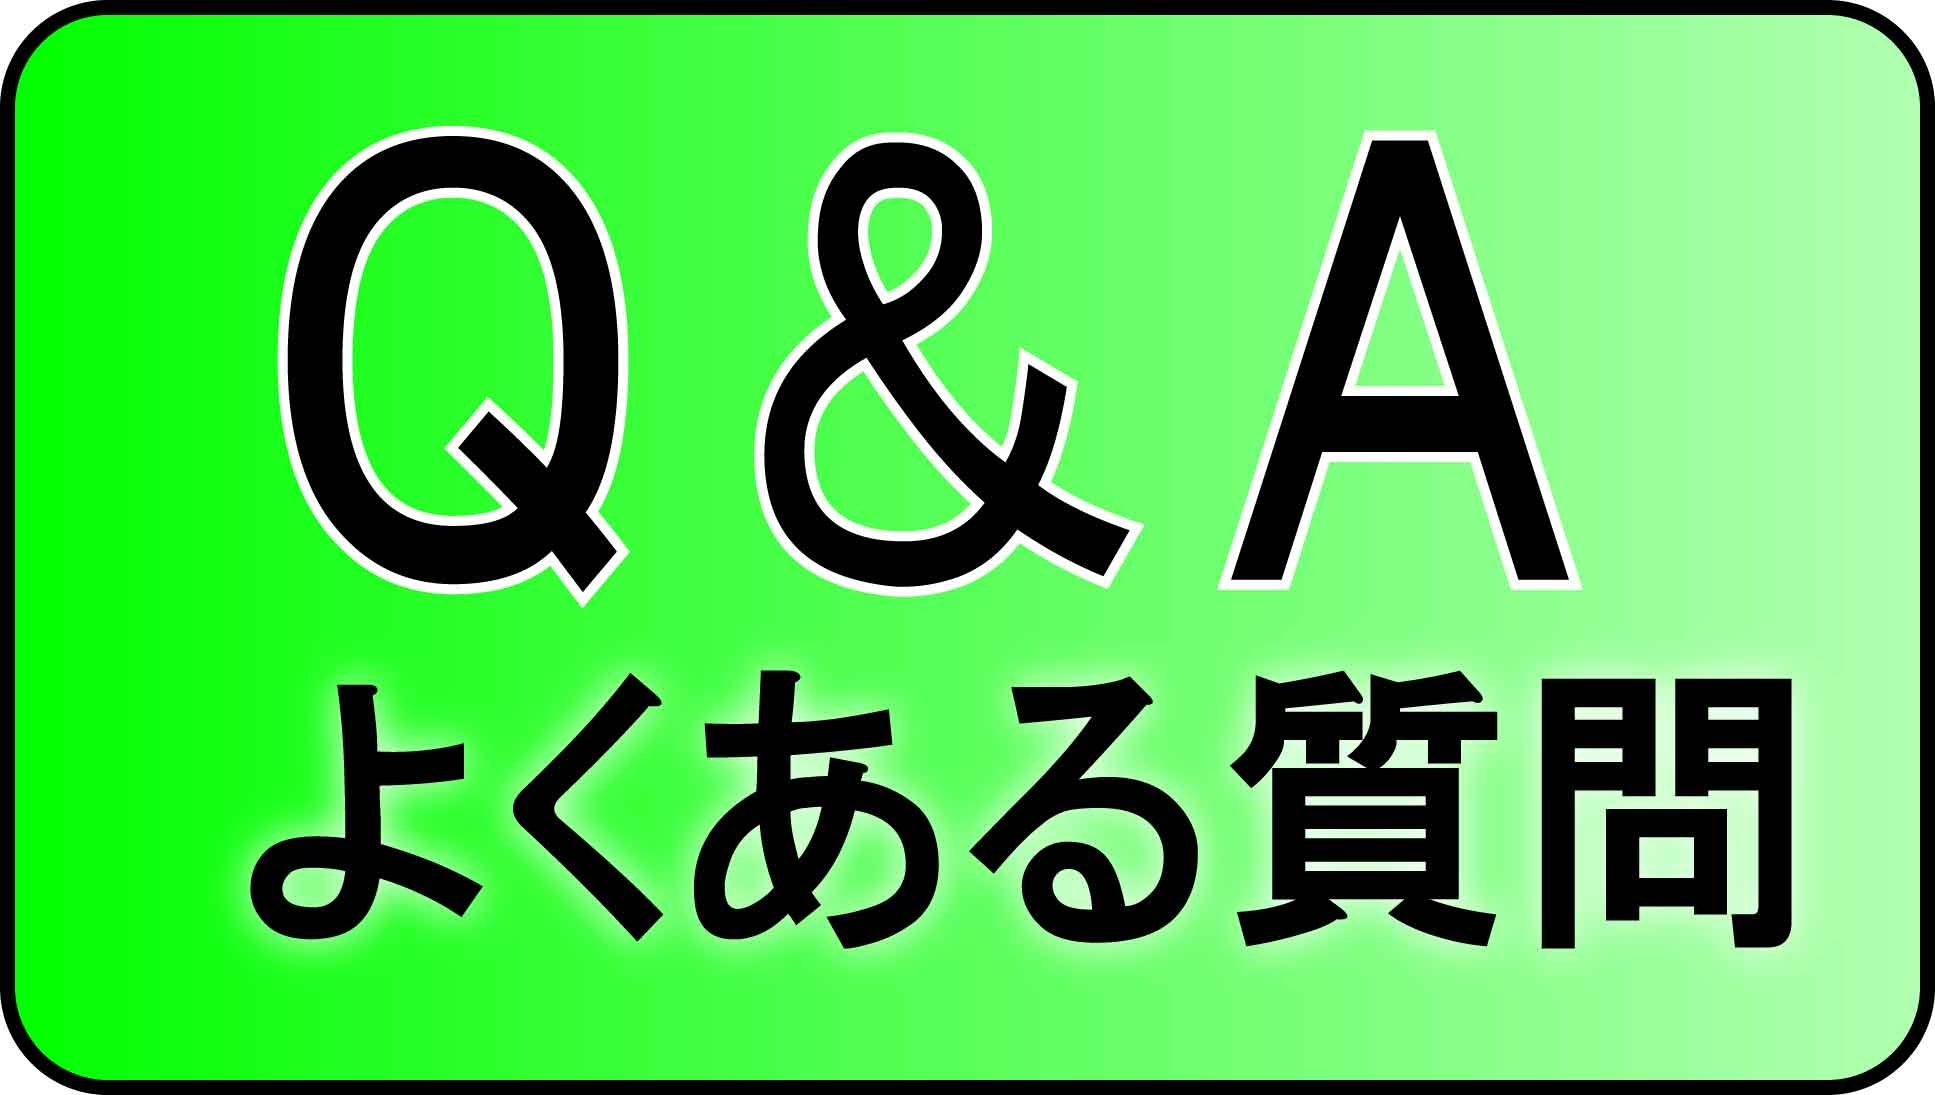 Q ａアイコン2 Kyoto University Football Club